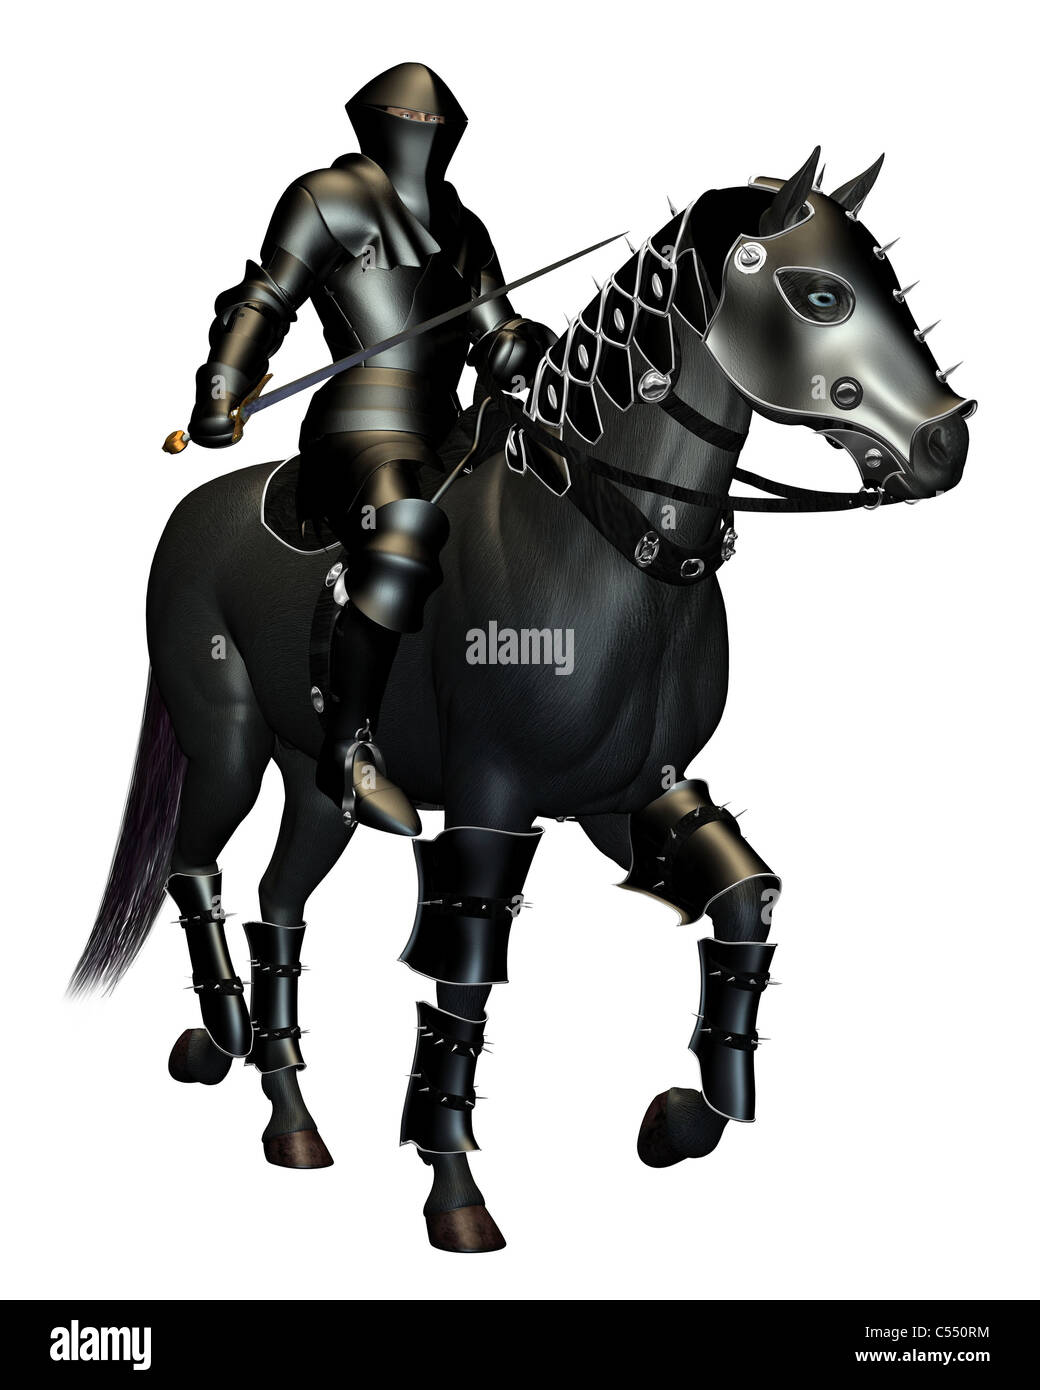 The Black Knight on Horseback Stock Photo